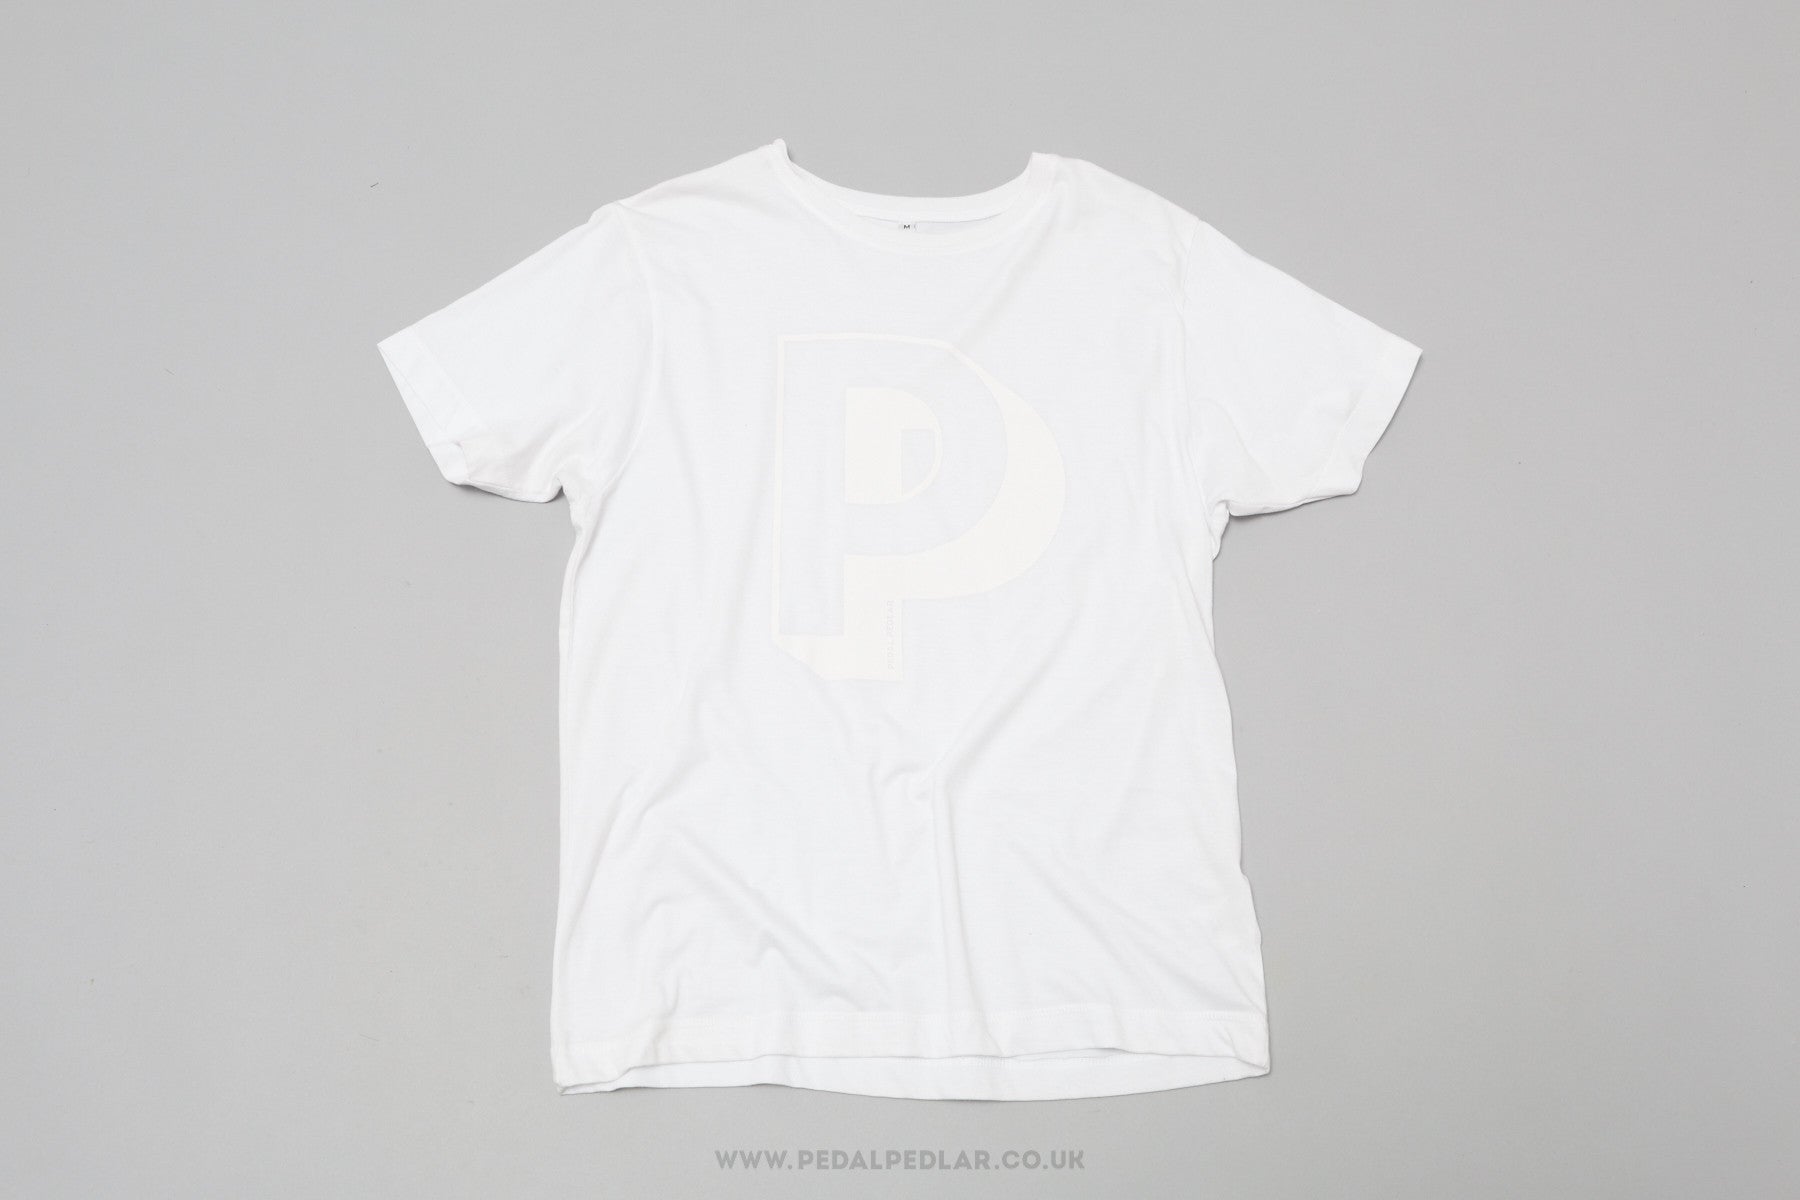 Pedal Pedlar Soft Cotton T-Shirt in White - Pedal Pedlar
 - 1